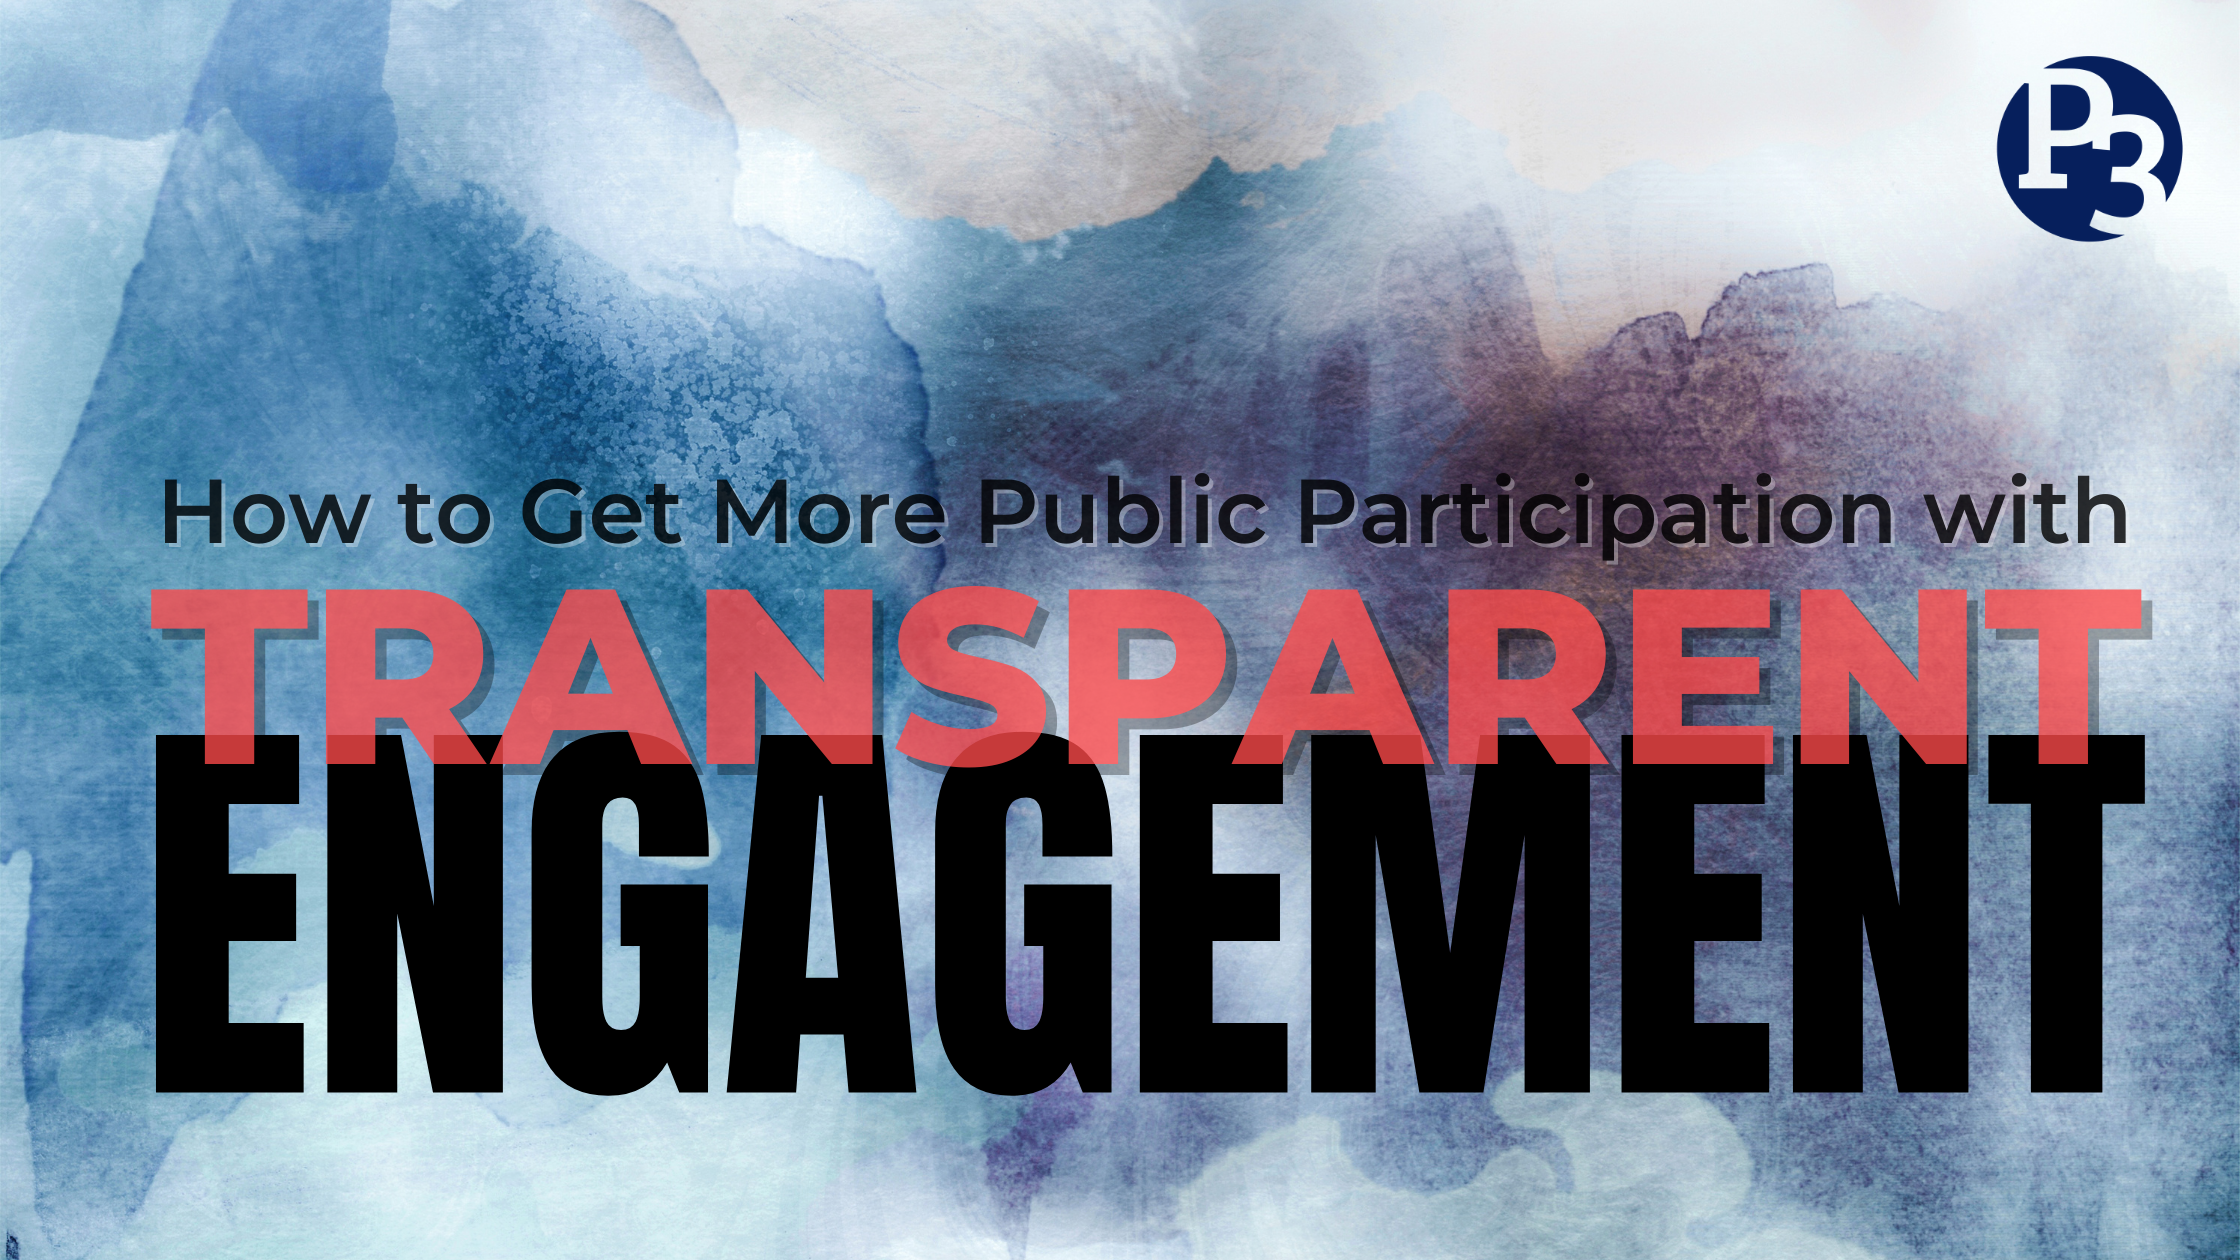 How to get more public participation with transparent engagement